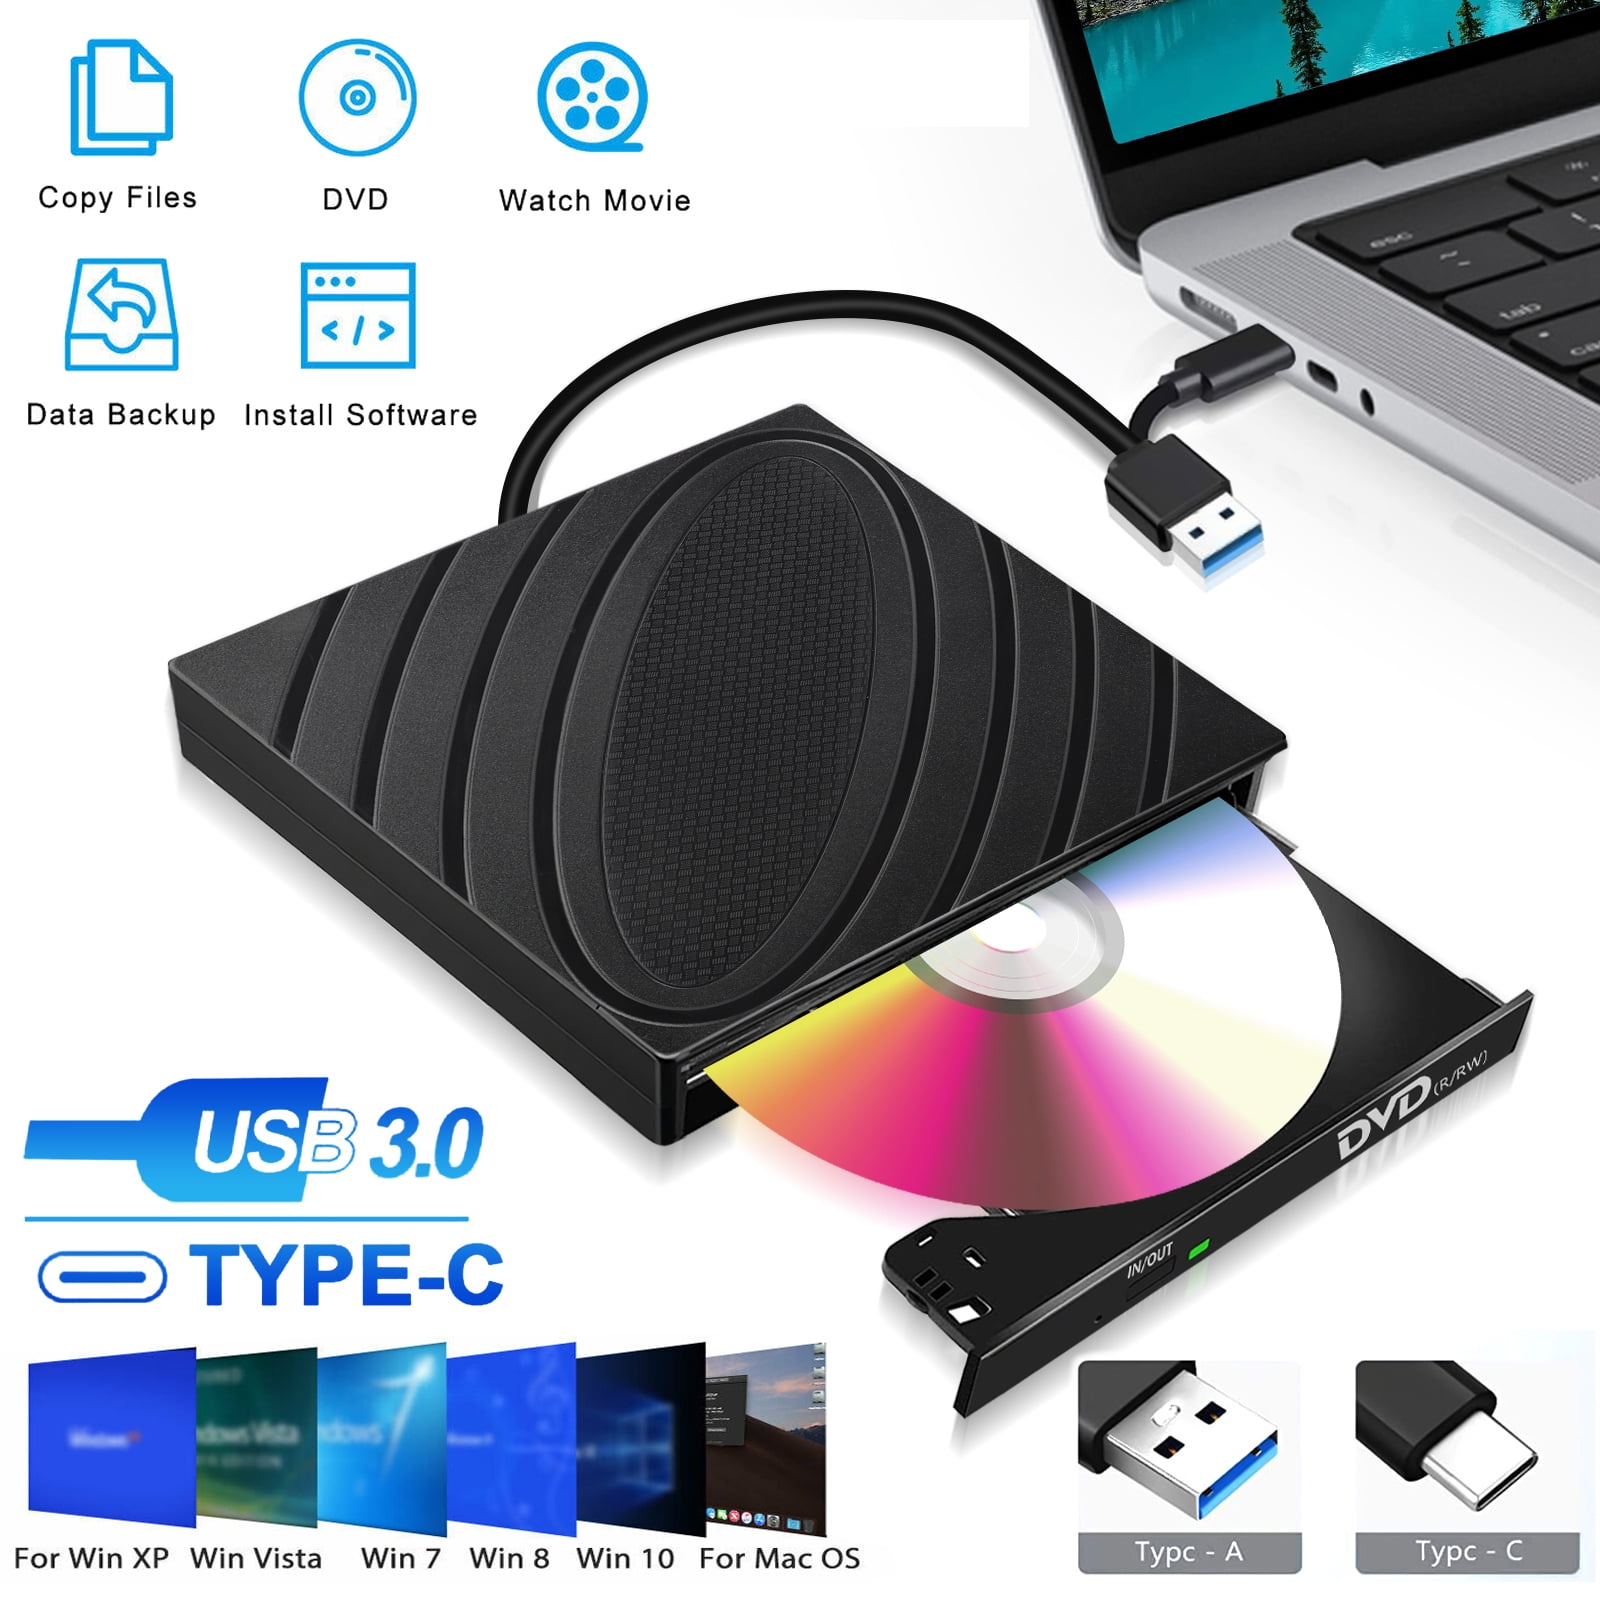 External CD DVD Drive for Laptop, EEEkit USB 2.0/3.0 CD/DVD +/-RW ROM  Reader Writer Burner Player, Portable Slim CD DVD Optical Disk Drive  Compatible